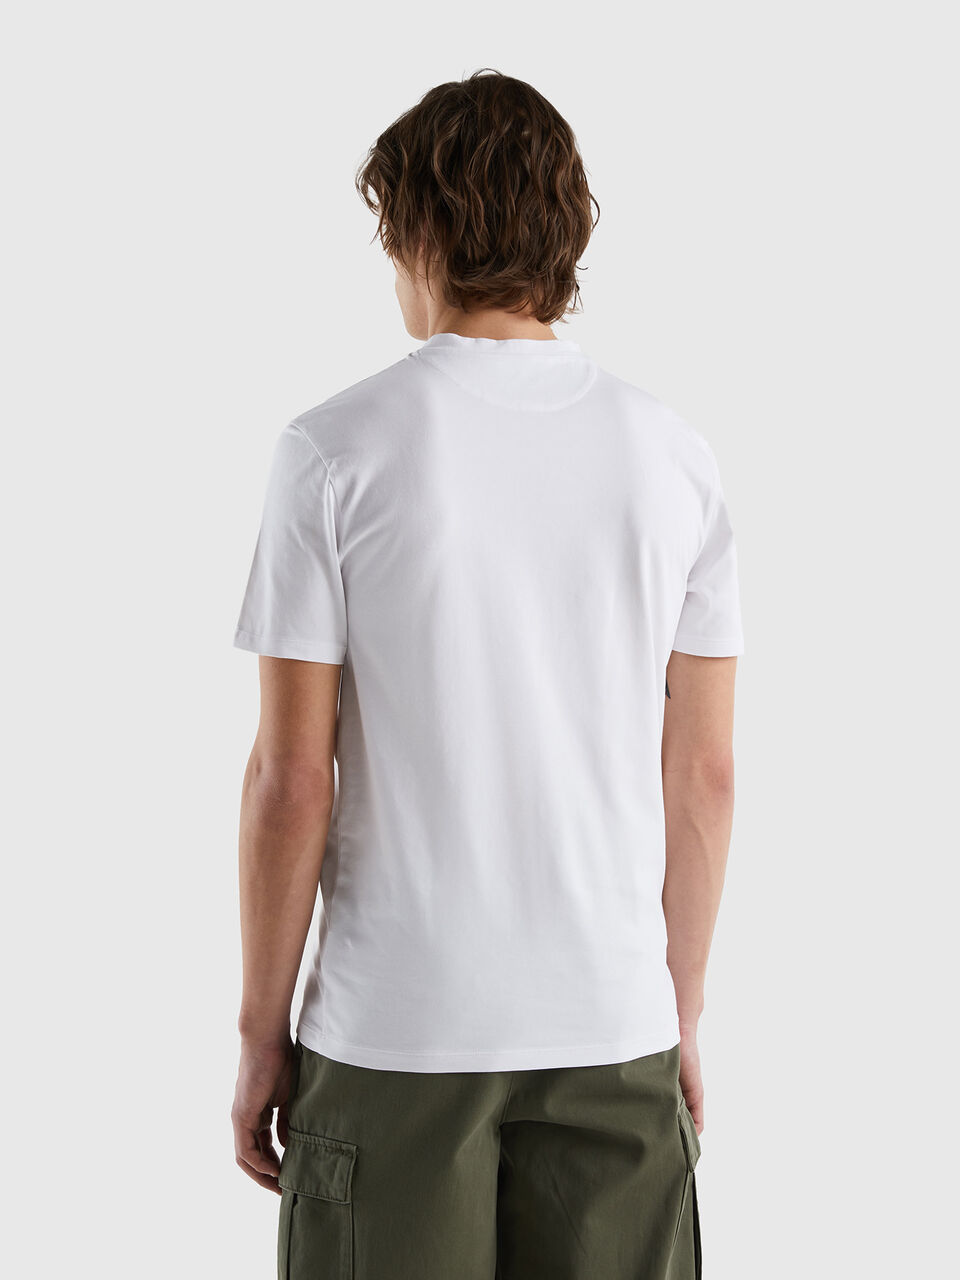 Slim fit - | White Benetton cotton t-shirt stretch in